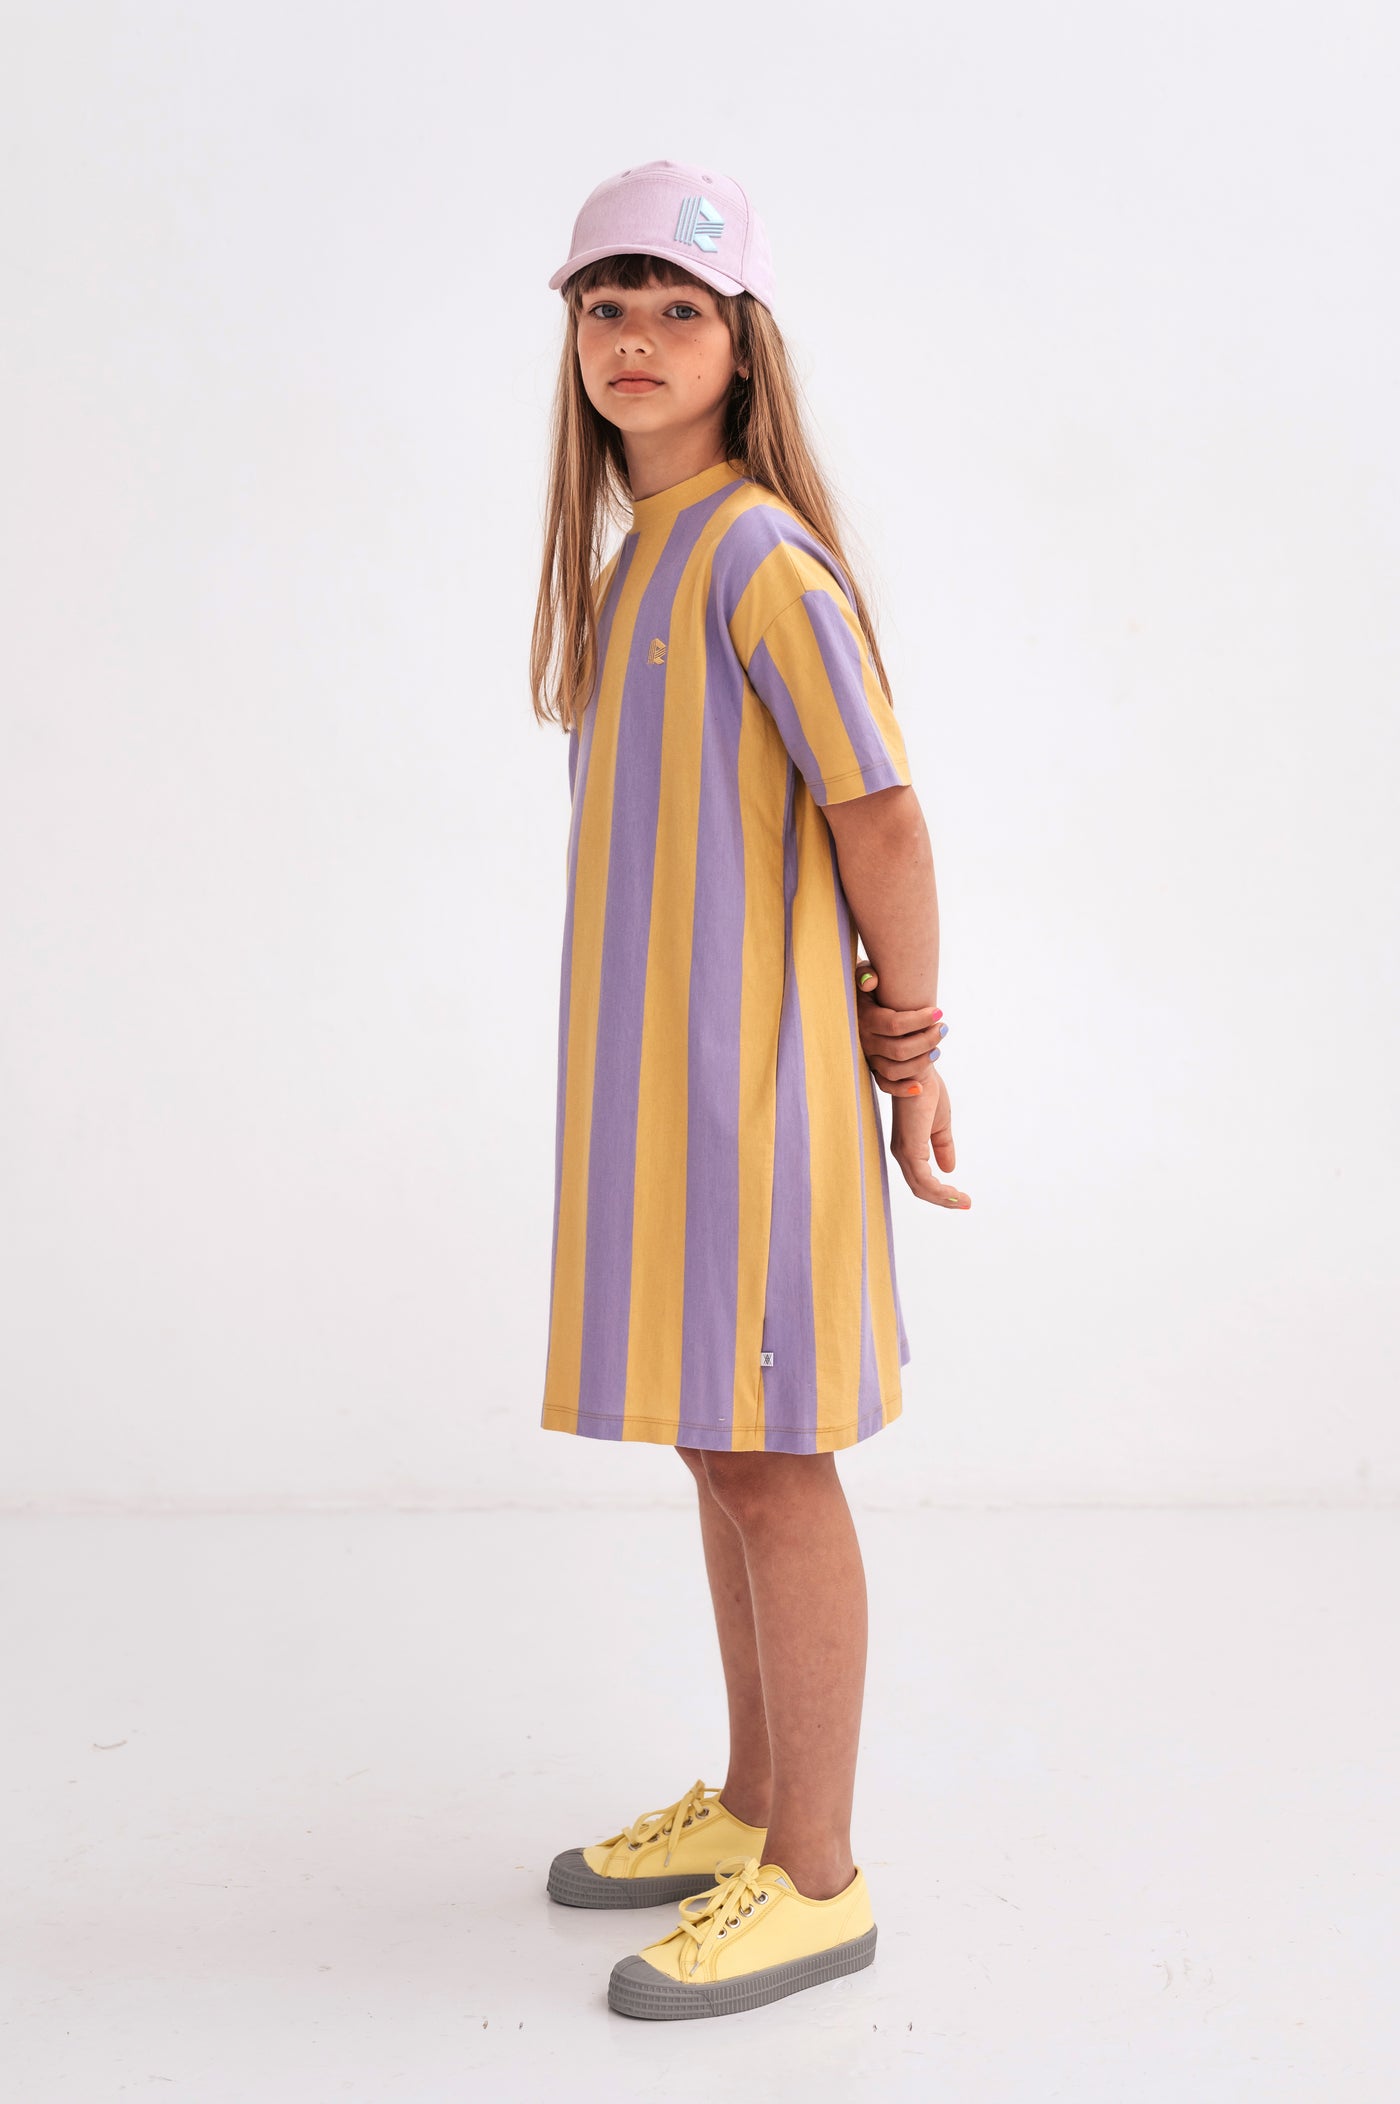 boxy tee dress - golden violet block stripe